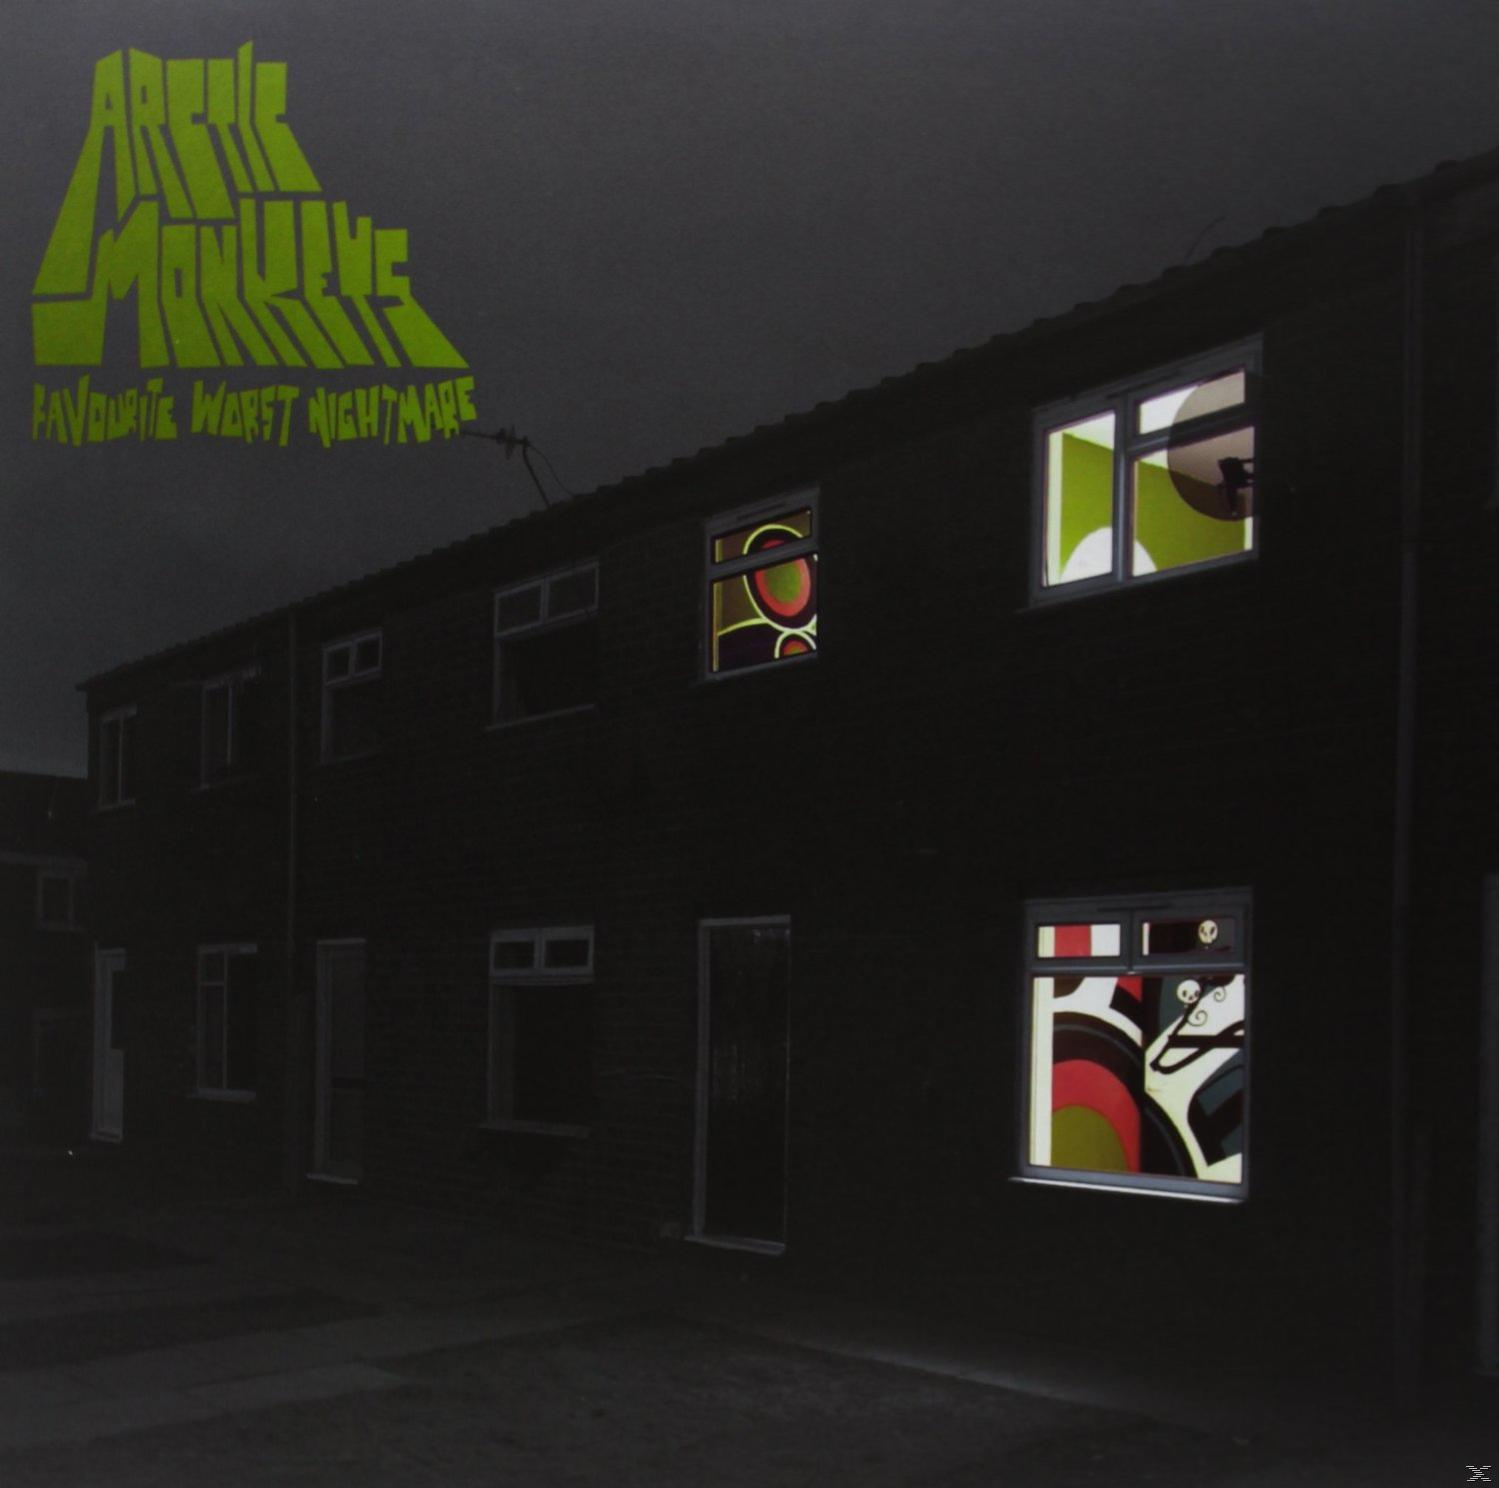 Arctic Monkeys - - Worst (Vinyl) Nightmare Favourite